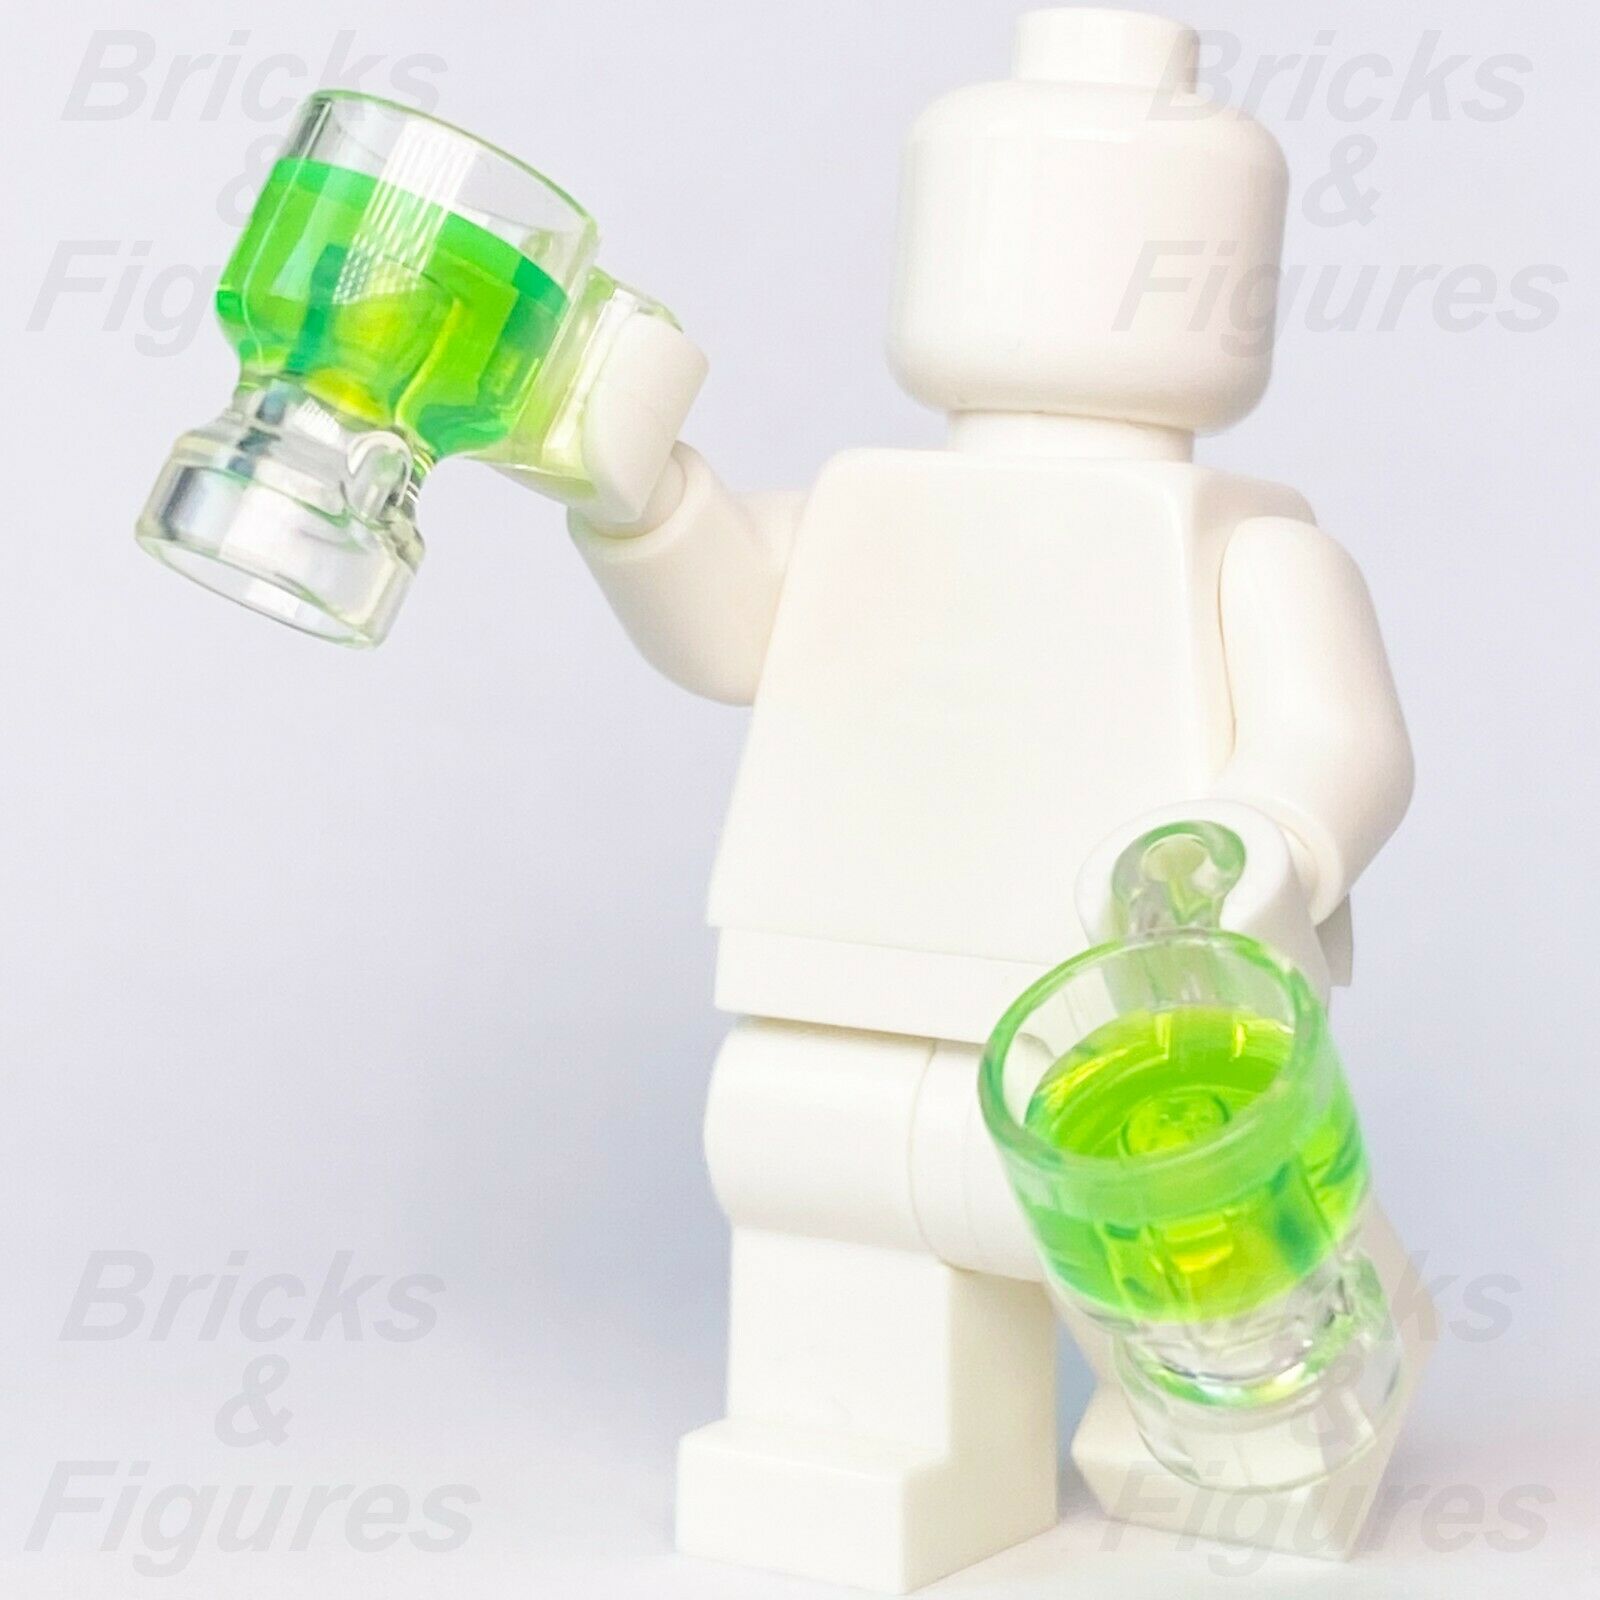 2 x Harry Potter LEGO Stein Cup Drink Pattern Green Minifigure Part 76386 - Bricks & Figures